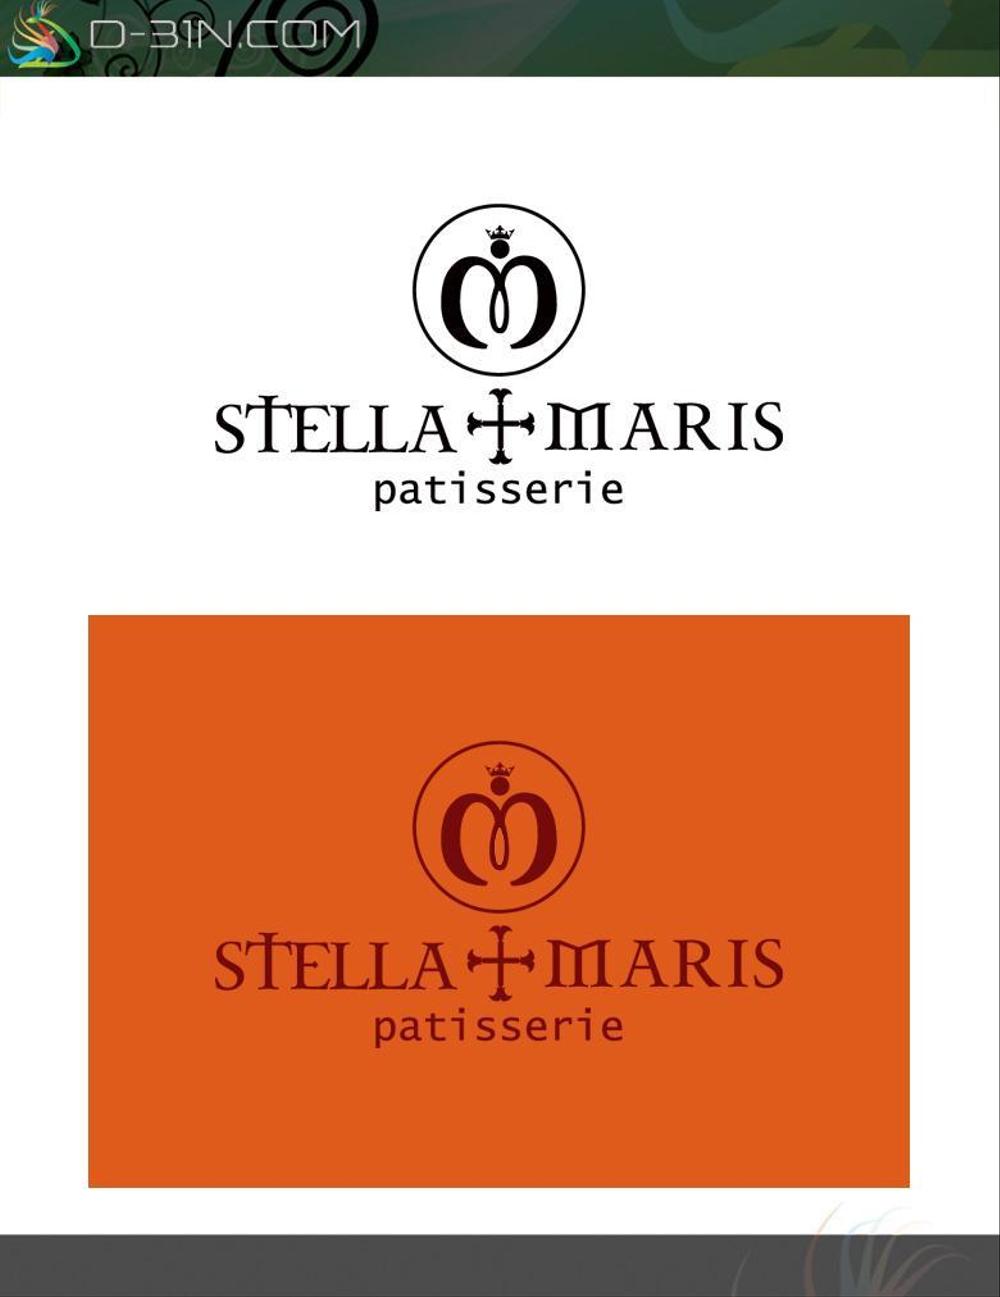 stella_maris-logo.jpg